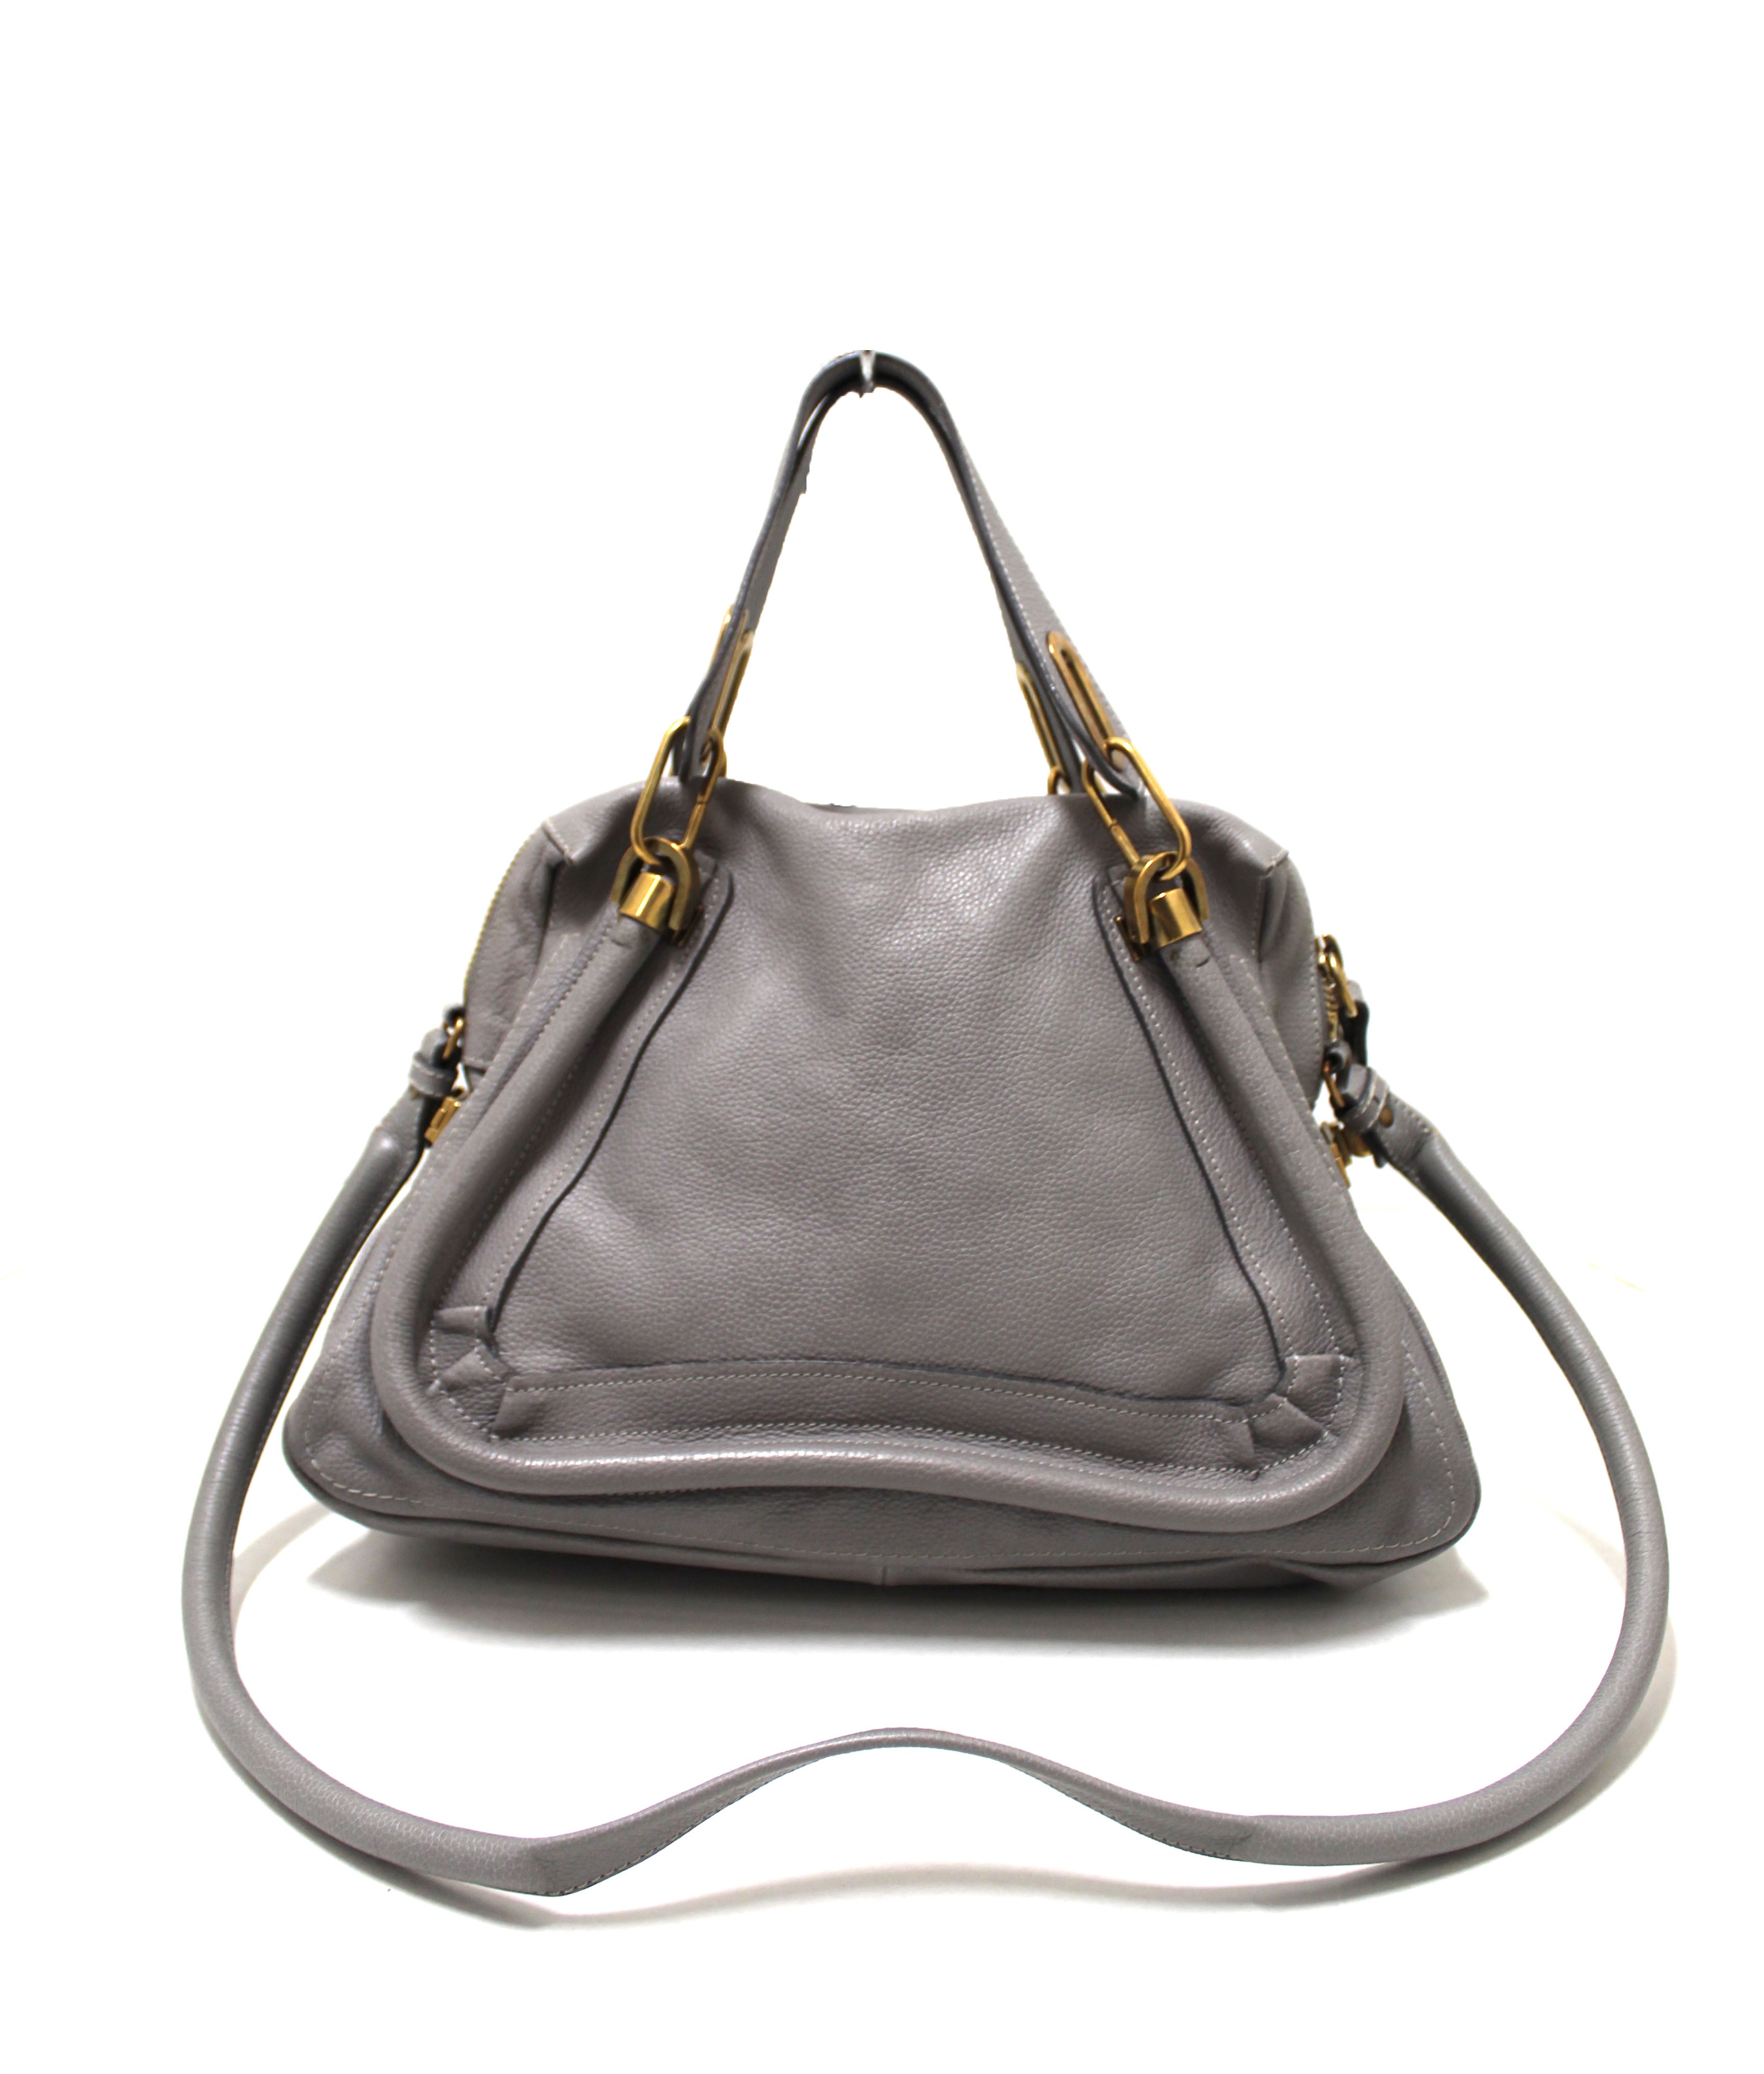 Authentic Chloe Paraty Grey Calfskin Leather Medium Shoulder Bag